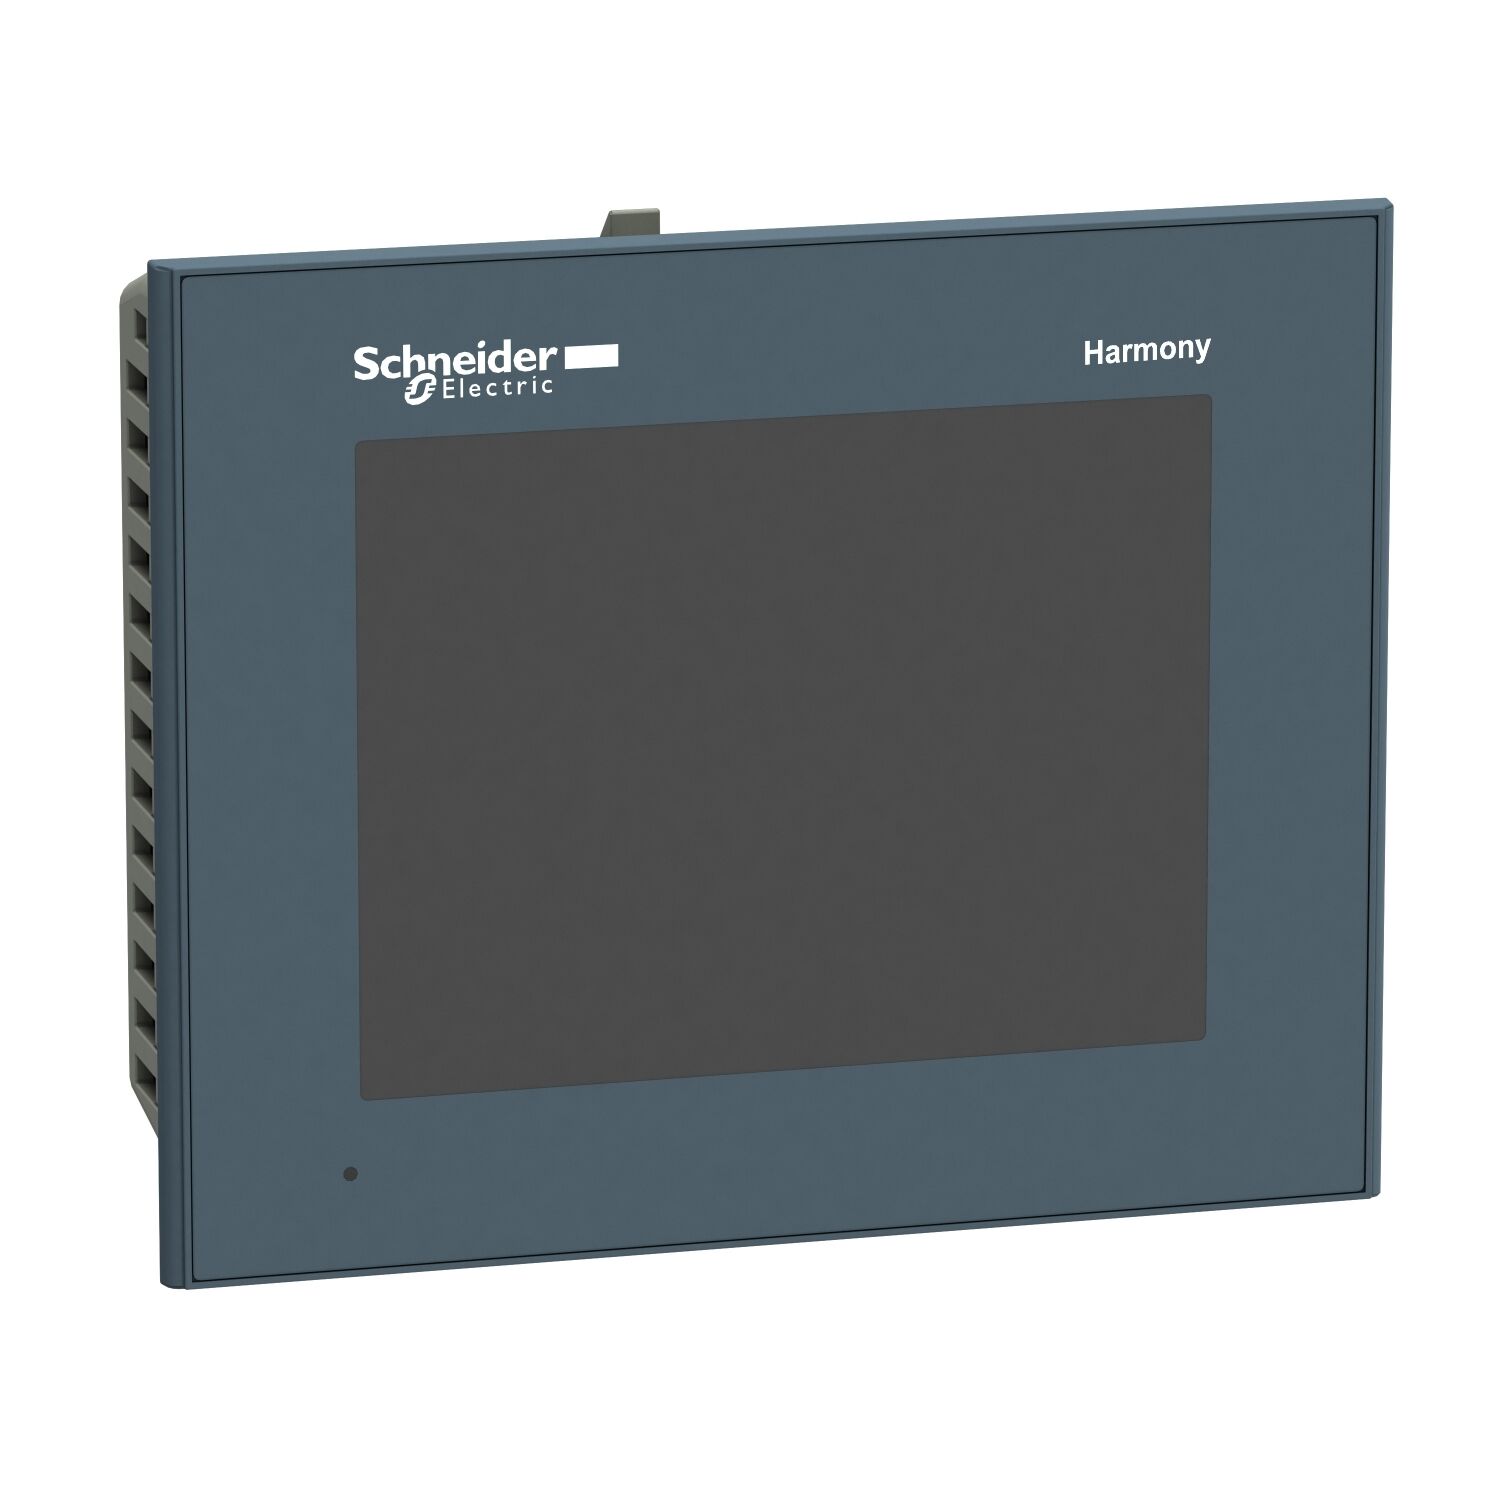 Schneider Electric HMIGTO2300 Dokunmatik Operatör Paneli 320 X 240 Piksel Qvga- 5,7'' Tft - 64 Mb